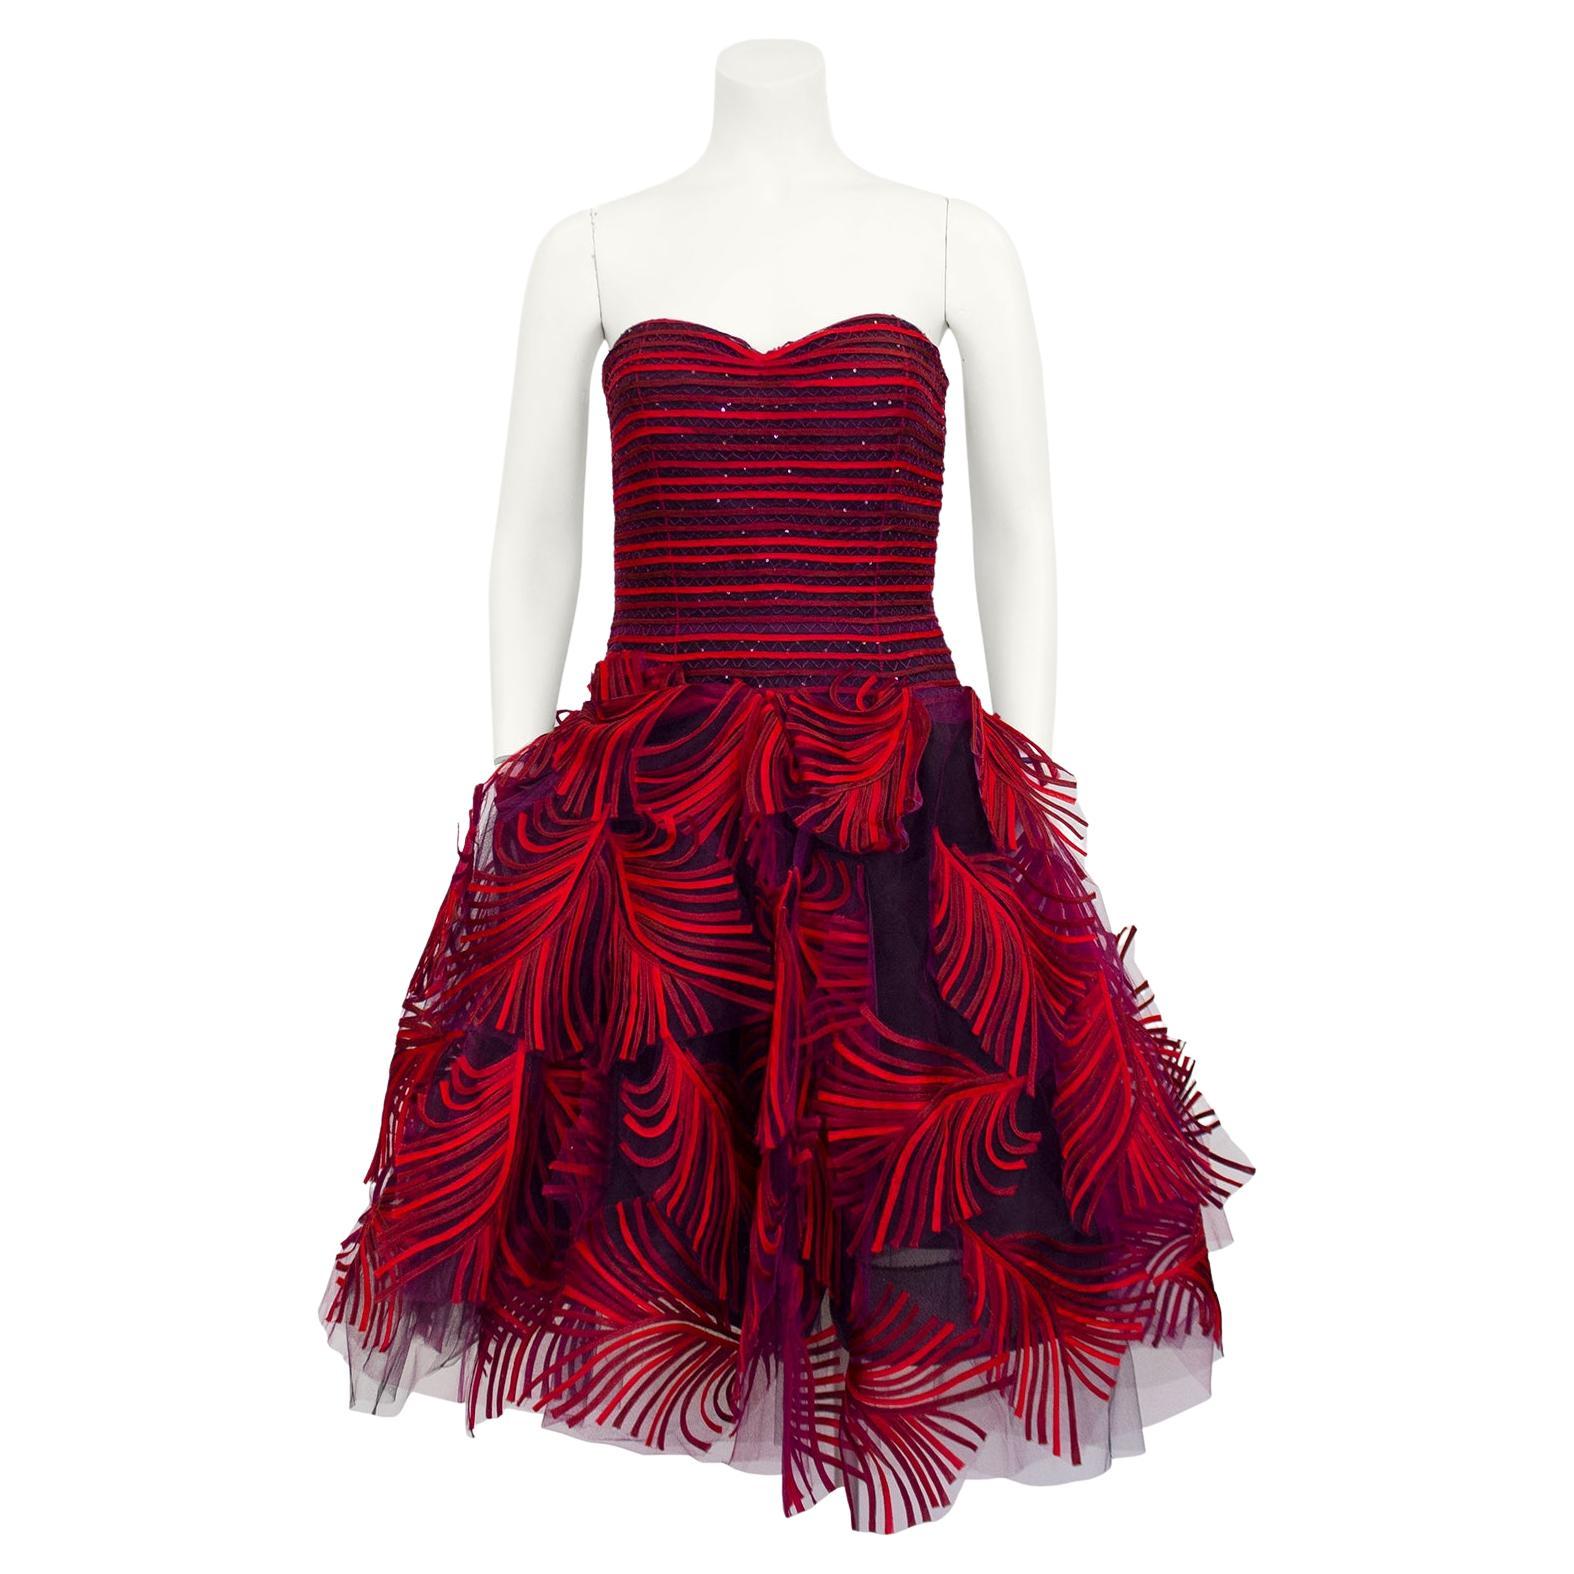 Fall 2009 Oscar de la Renta Red and Black Strapless Cocktail Dress 